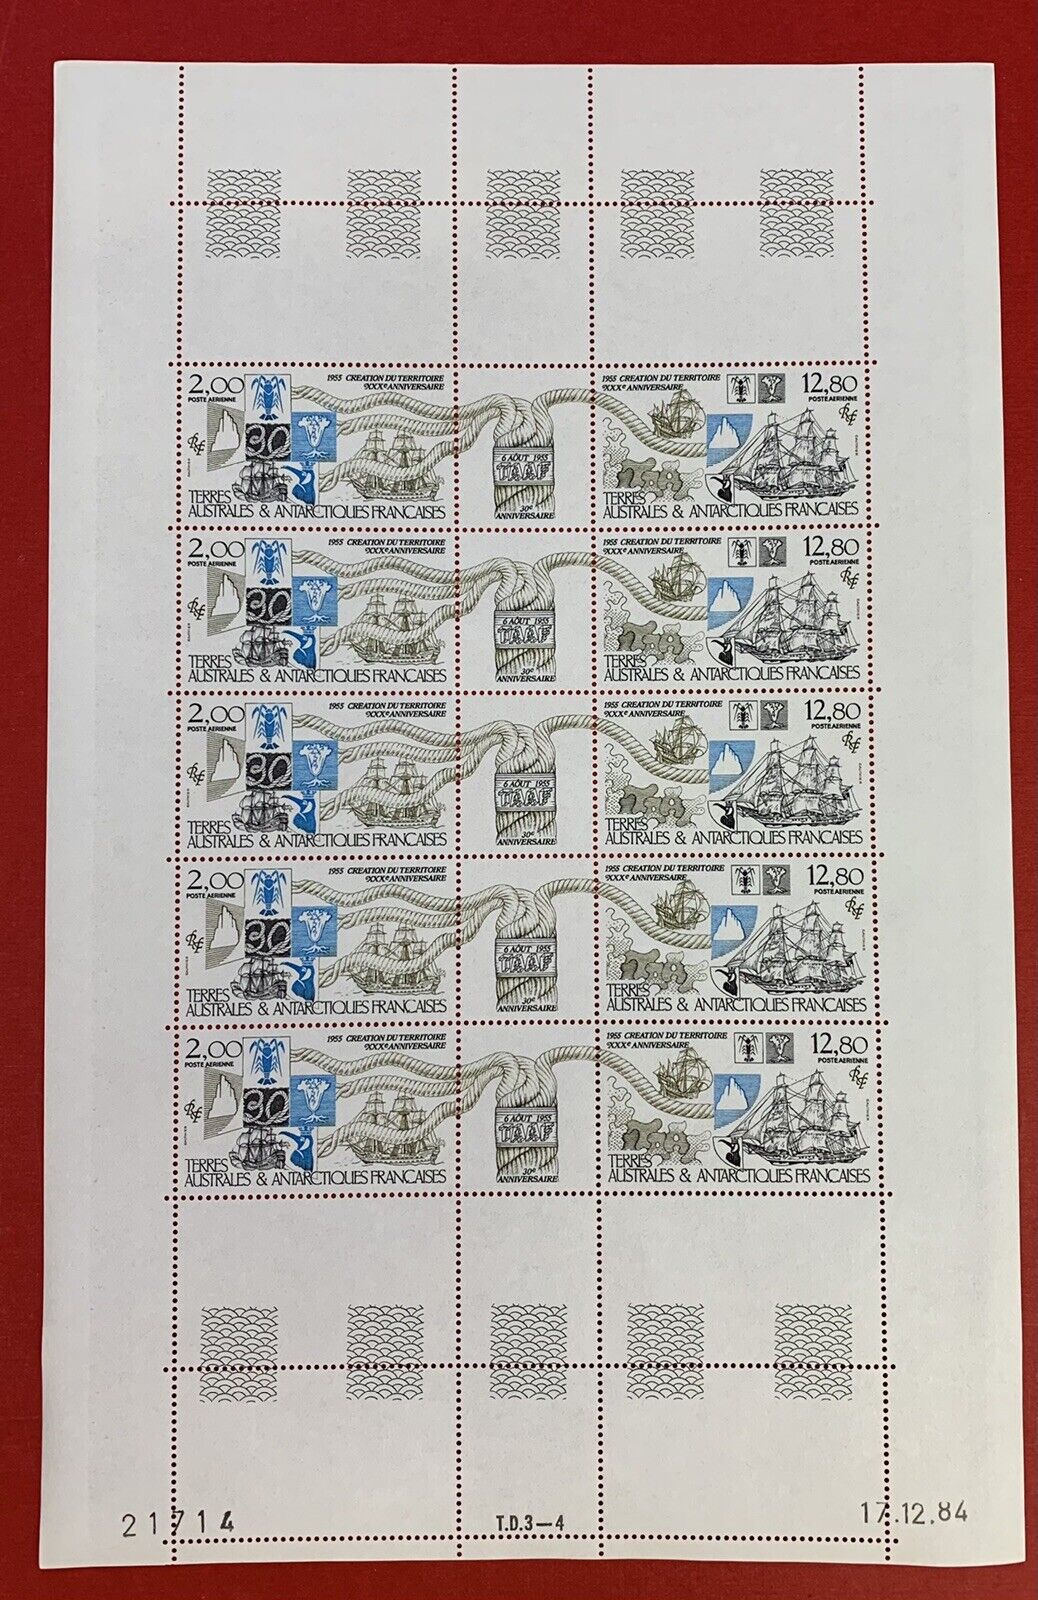 French So. Antarctic Terr. 1985, Scott #C89-90, Sheet of 10 + 5 Labels, Mint, NH